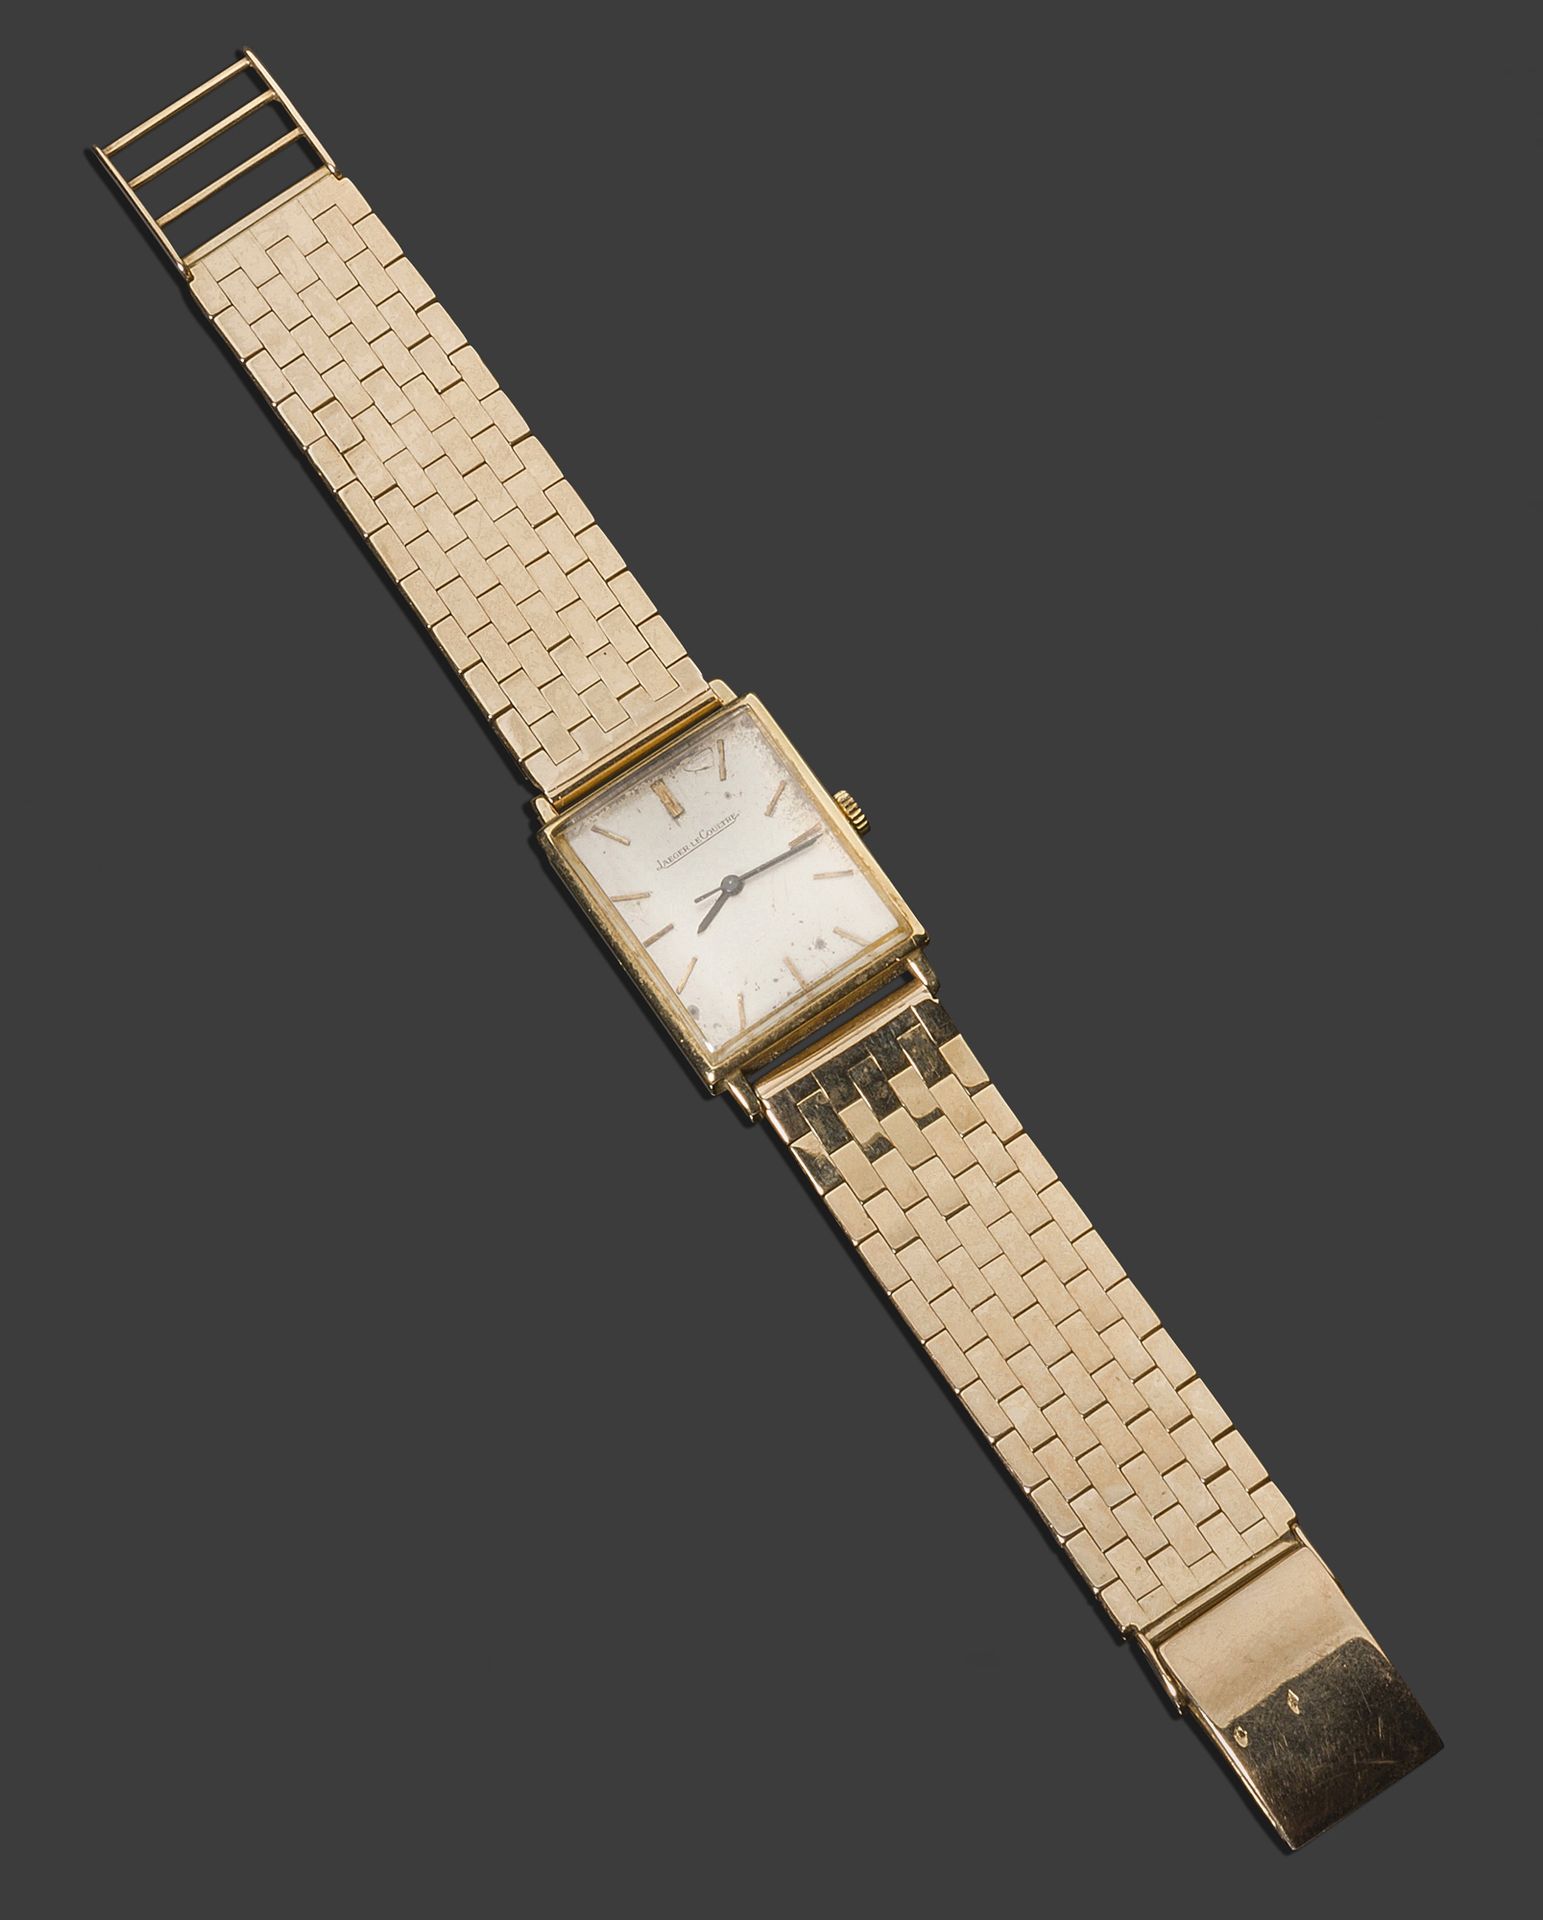 JAEGER Le COULTRE Herrenuhr mit flexiblem Armband aus Gold (18 K).

Brutto-Gewic&hellip;